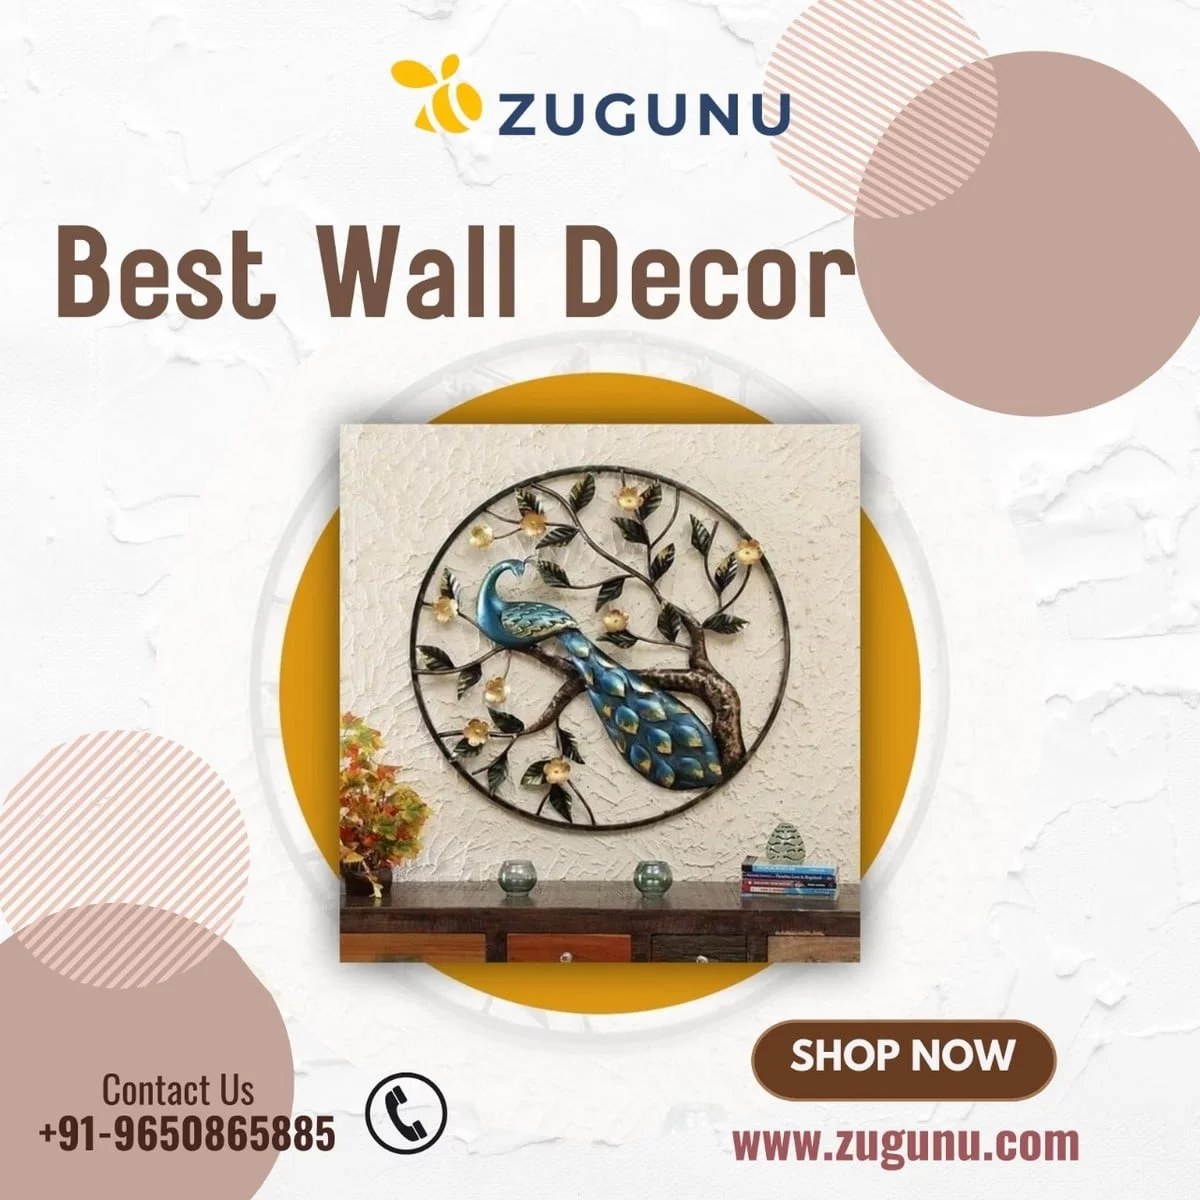 Discover The Latest Finest Online Wall Decor At Zugunu